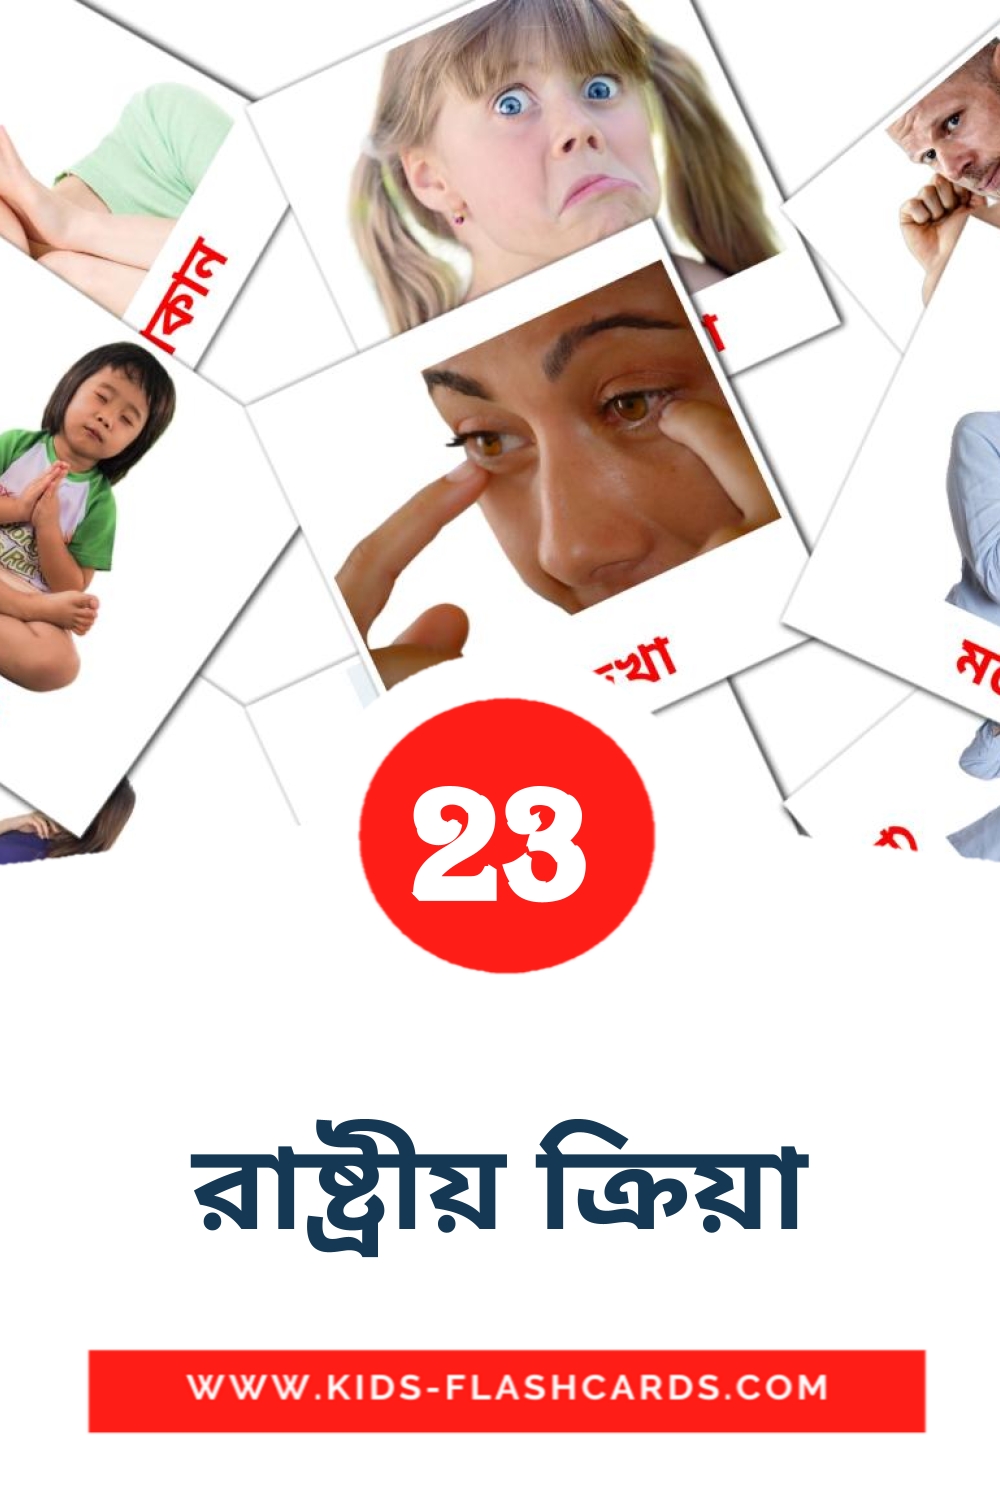 23 carte illustrate di রাষ্ট্রীয় ক্রিয়া per la scuola materna in bengalese